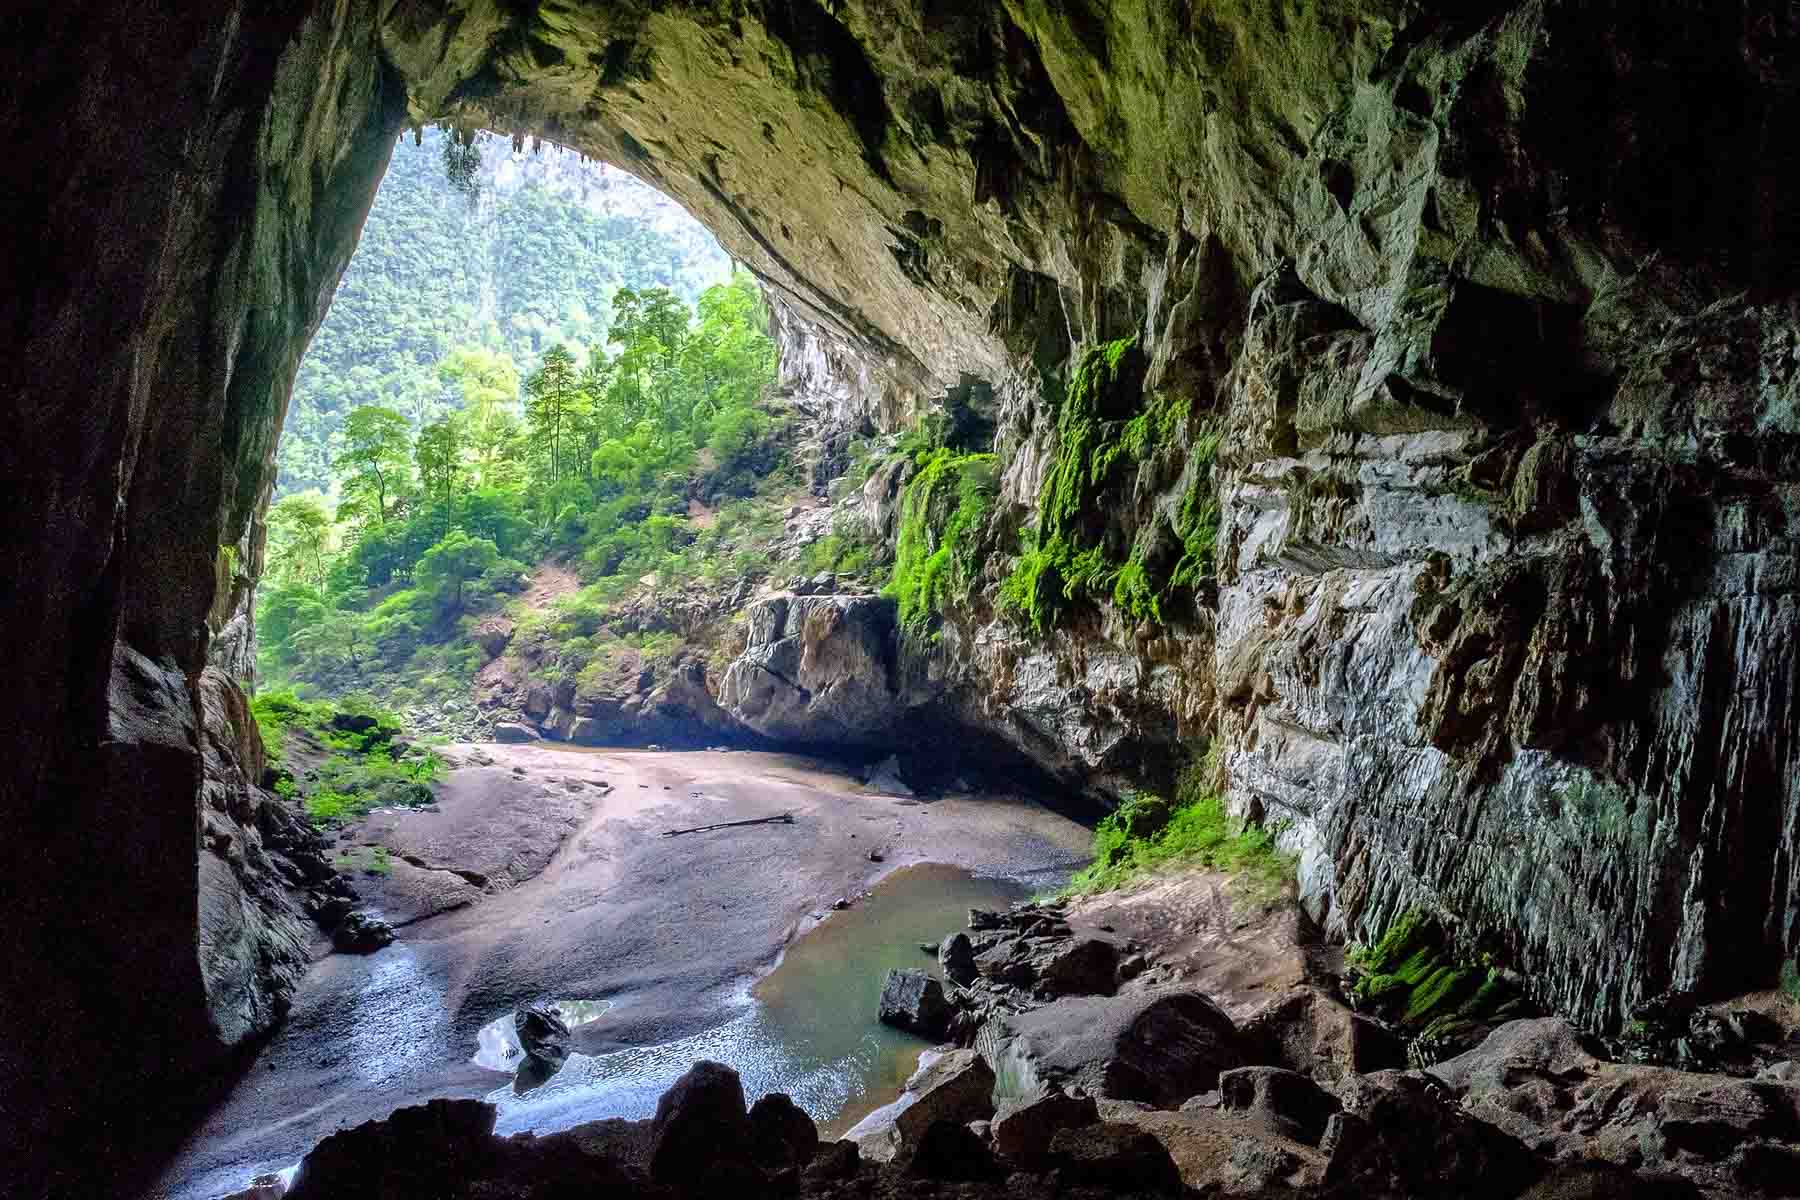 Hang En Cave entrance in Phong Nha Ke Bang National Park.